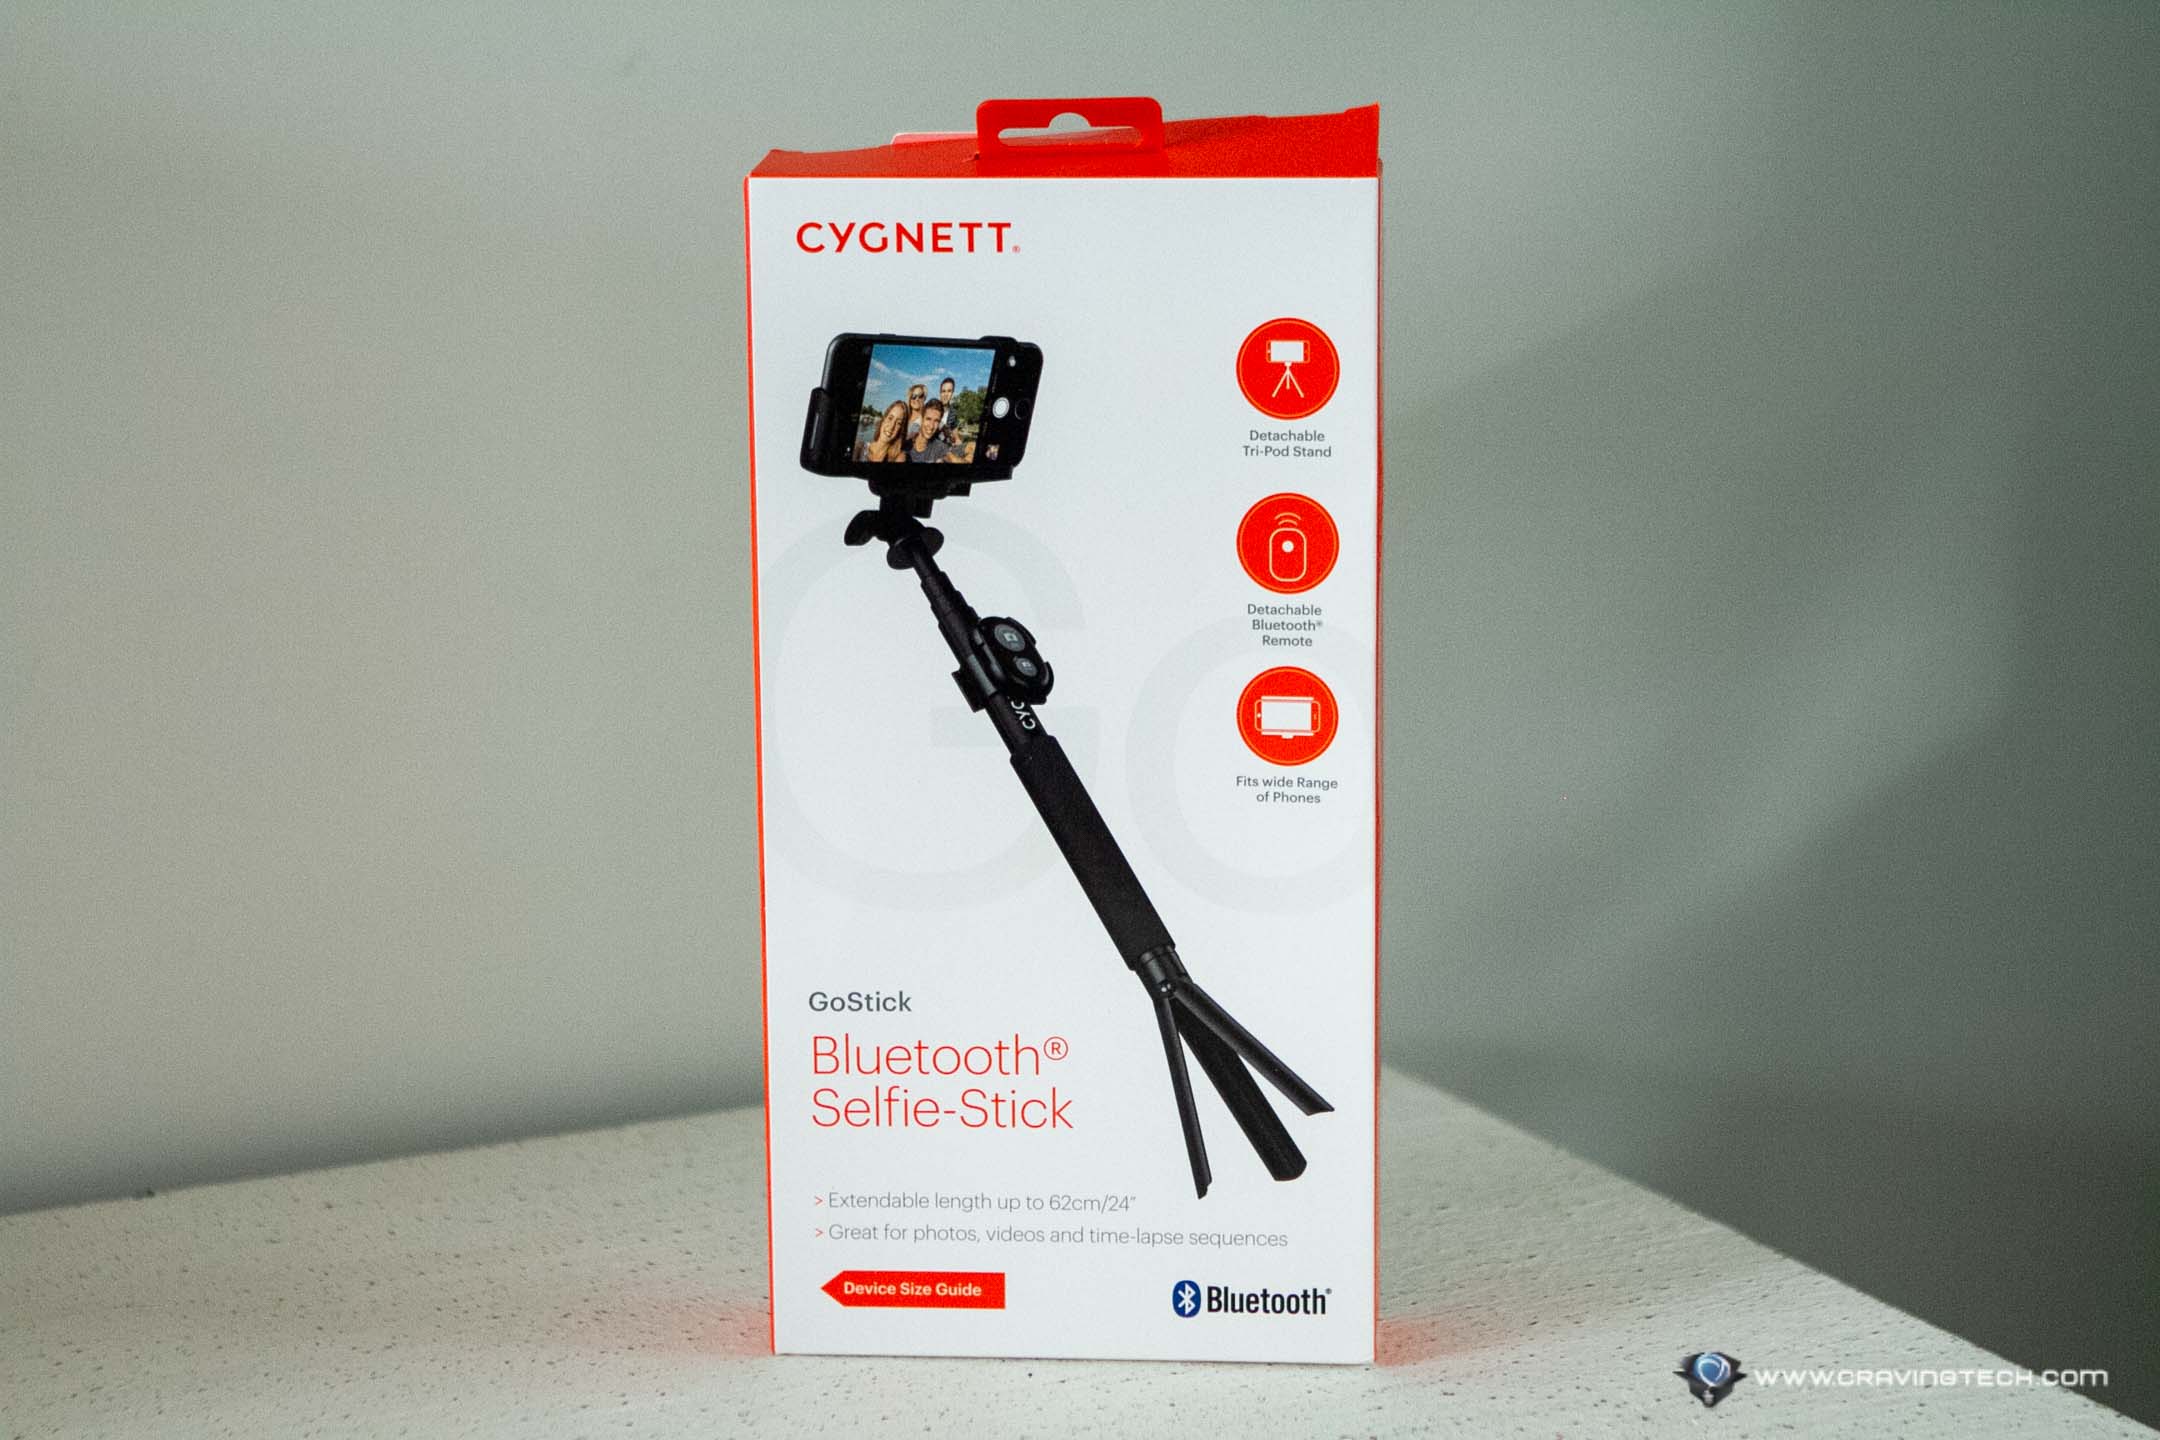 Cygnett GoStick Bluetooth Camera Selfie Stick & Smartphone Tripod Review